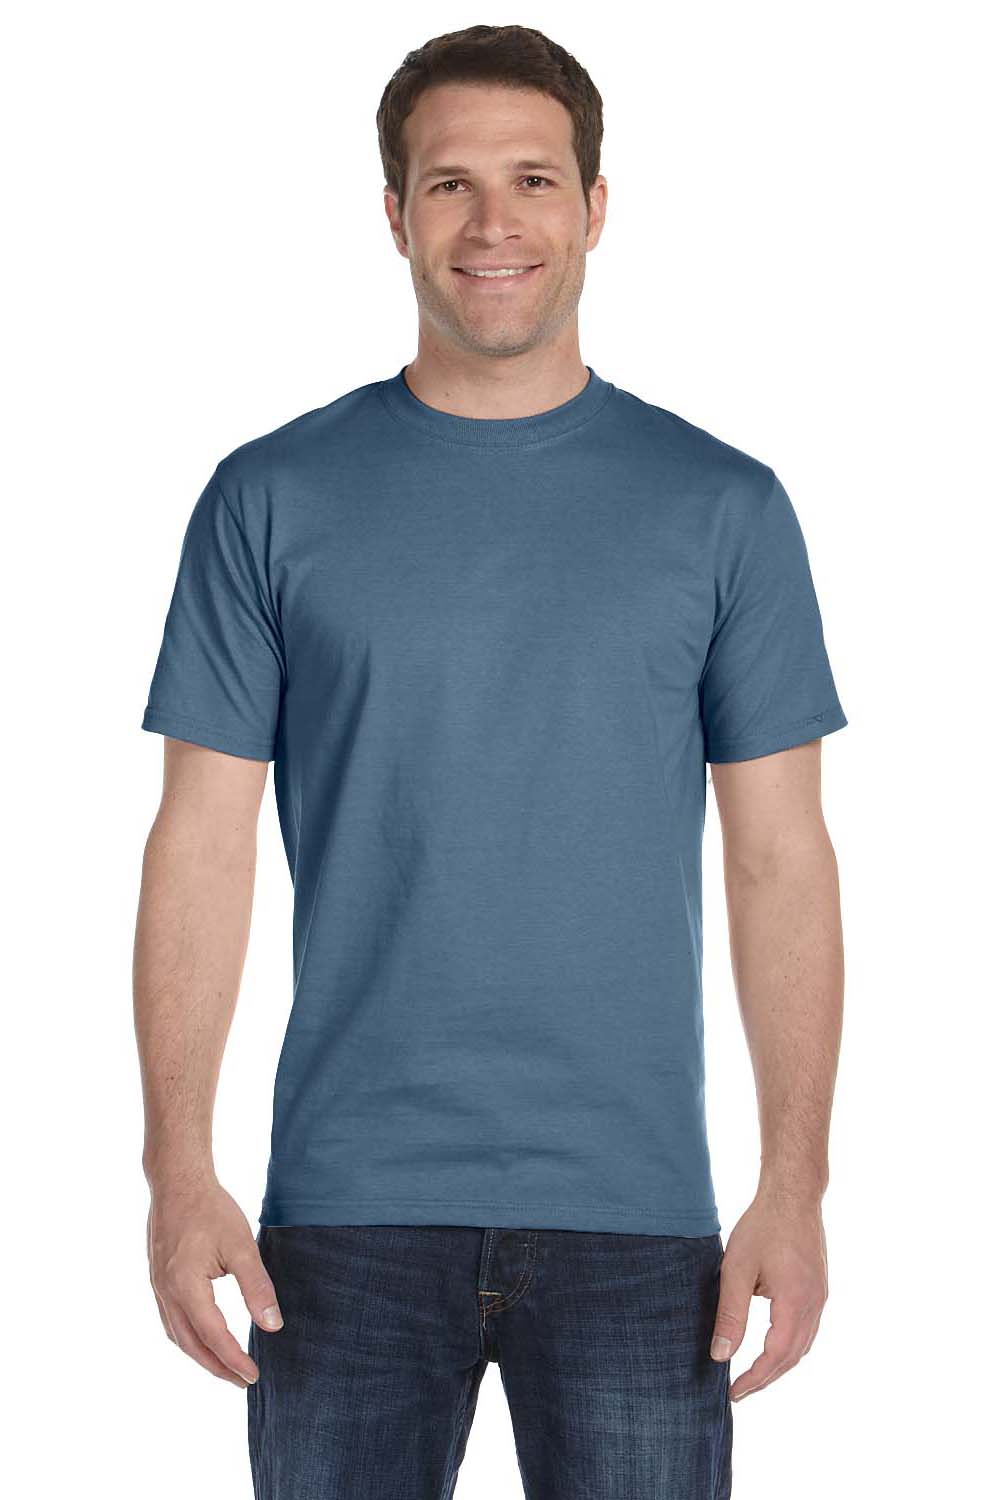 Hanes 5180 Mens Beefy-T Short Sleeve Crewneck T-Shirt Denim Blue Front